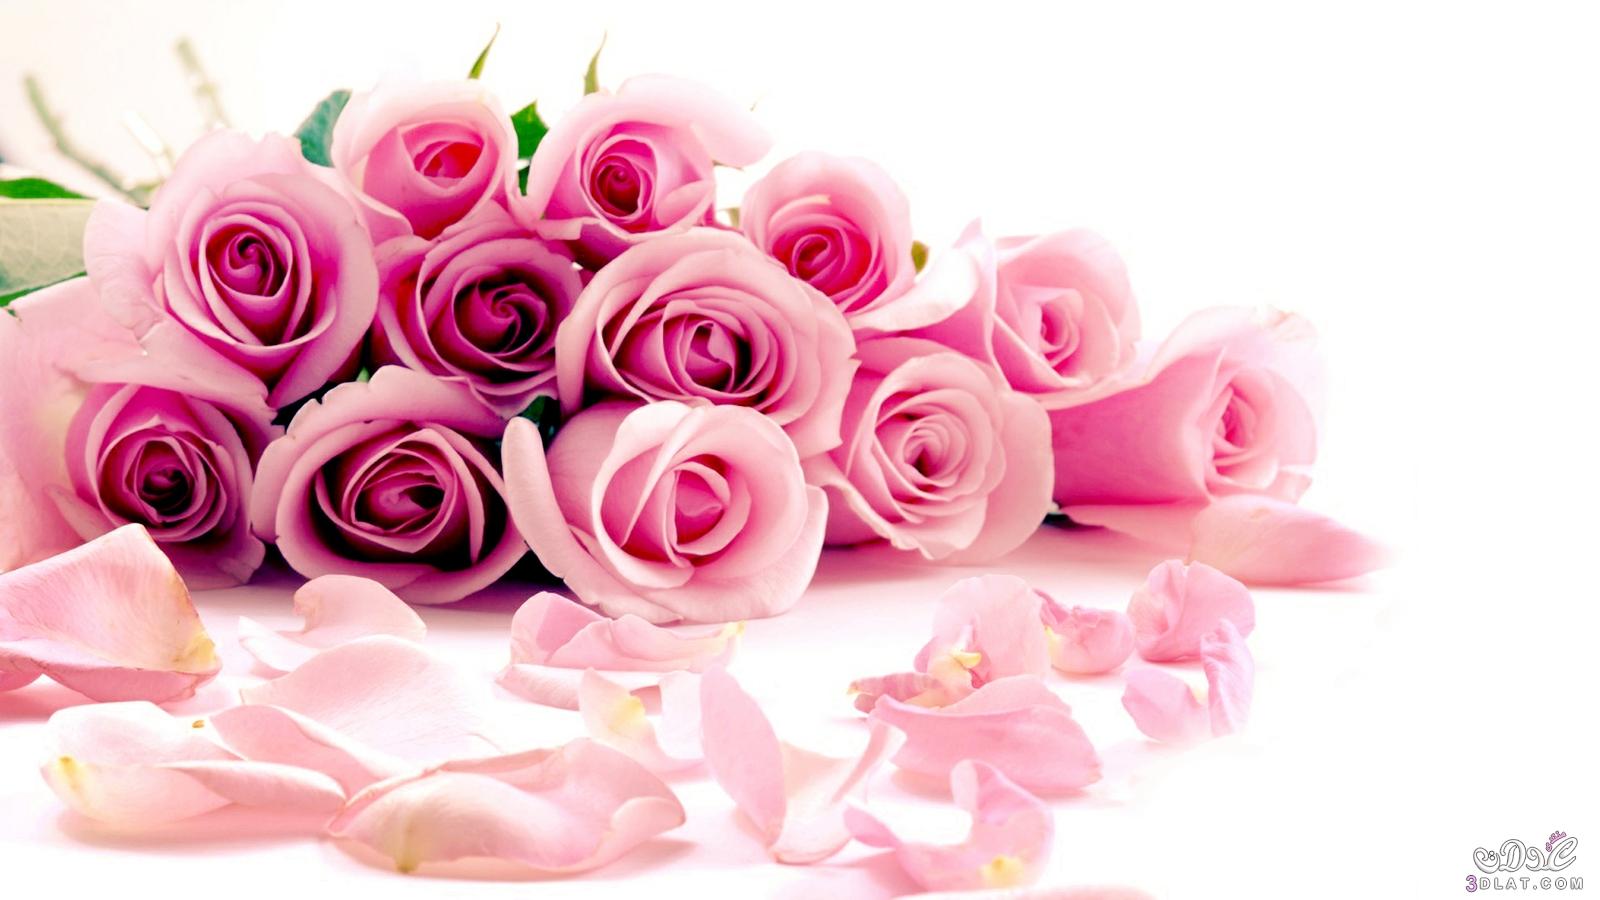 Pink flawer 2023, اجمل ورد روز2023,احدث تشكيله ورد وزهور بينك 2023, باقات ورد وخلفيات زهور بينك2023